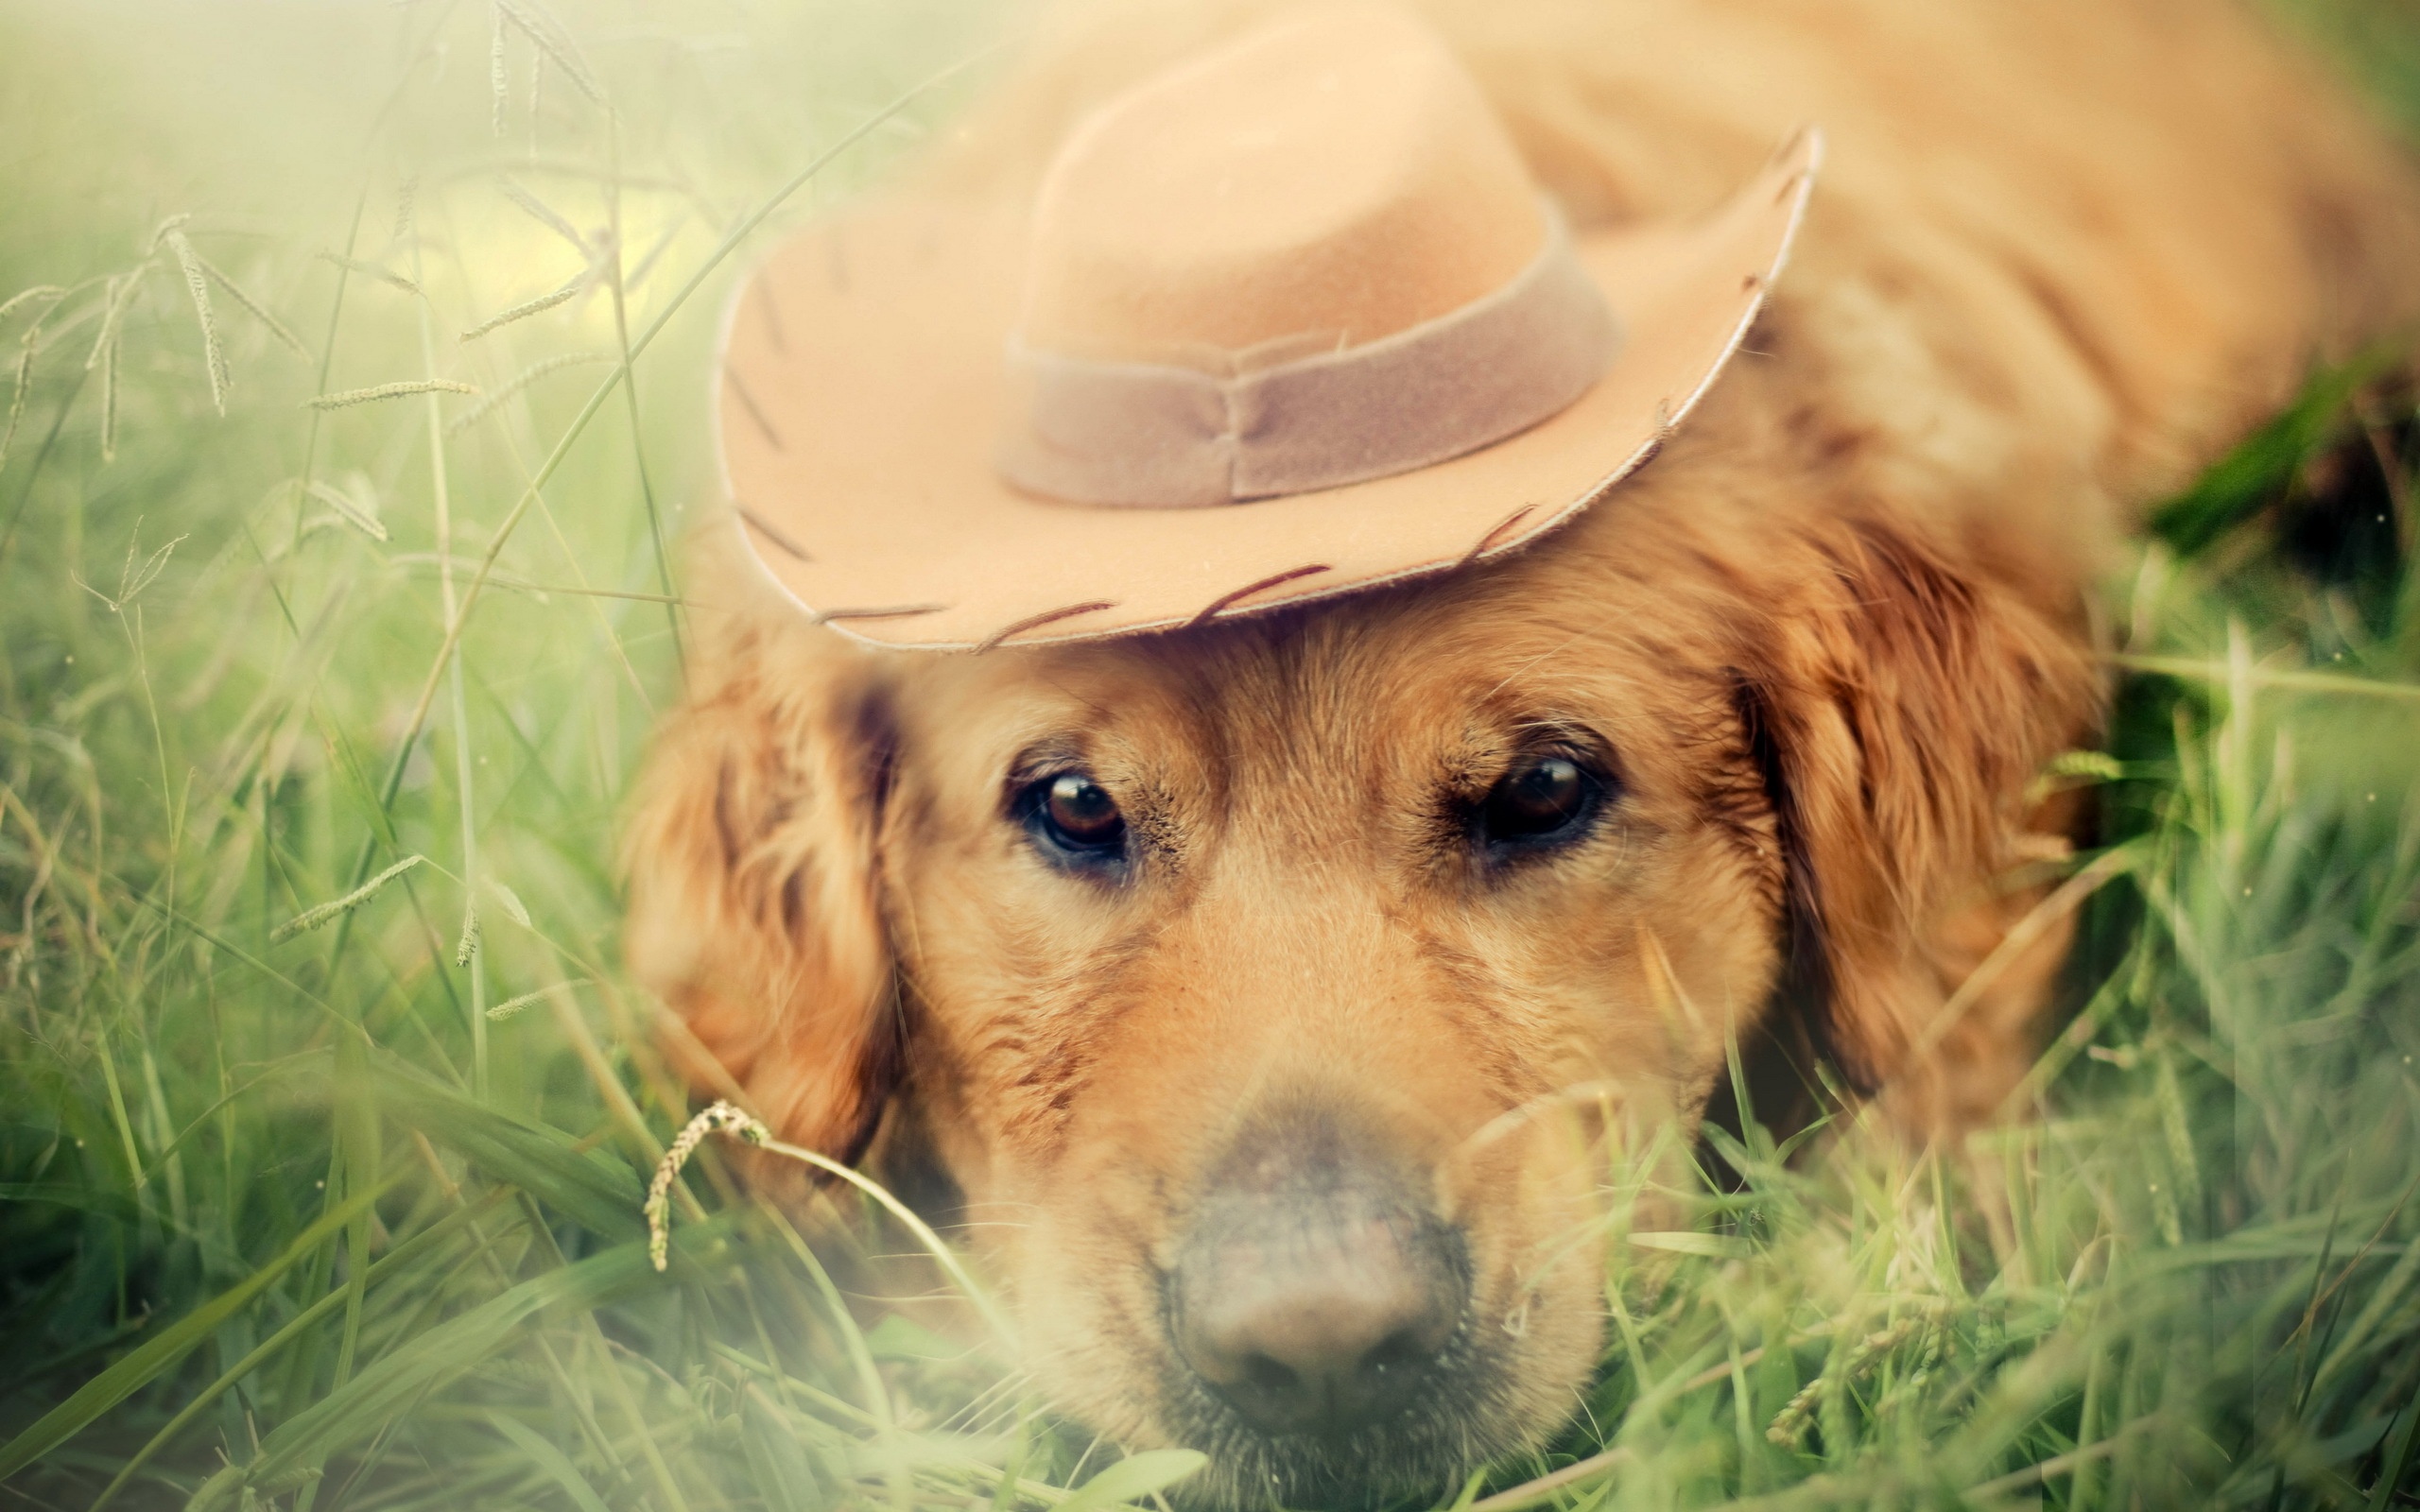 Sad Dog With Hat